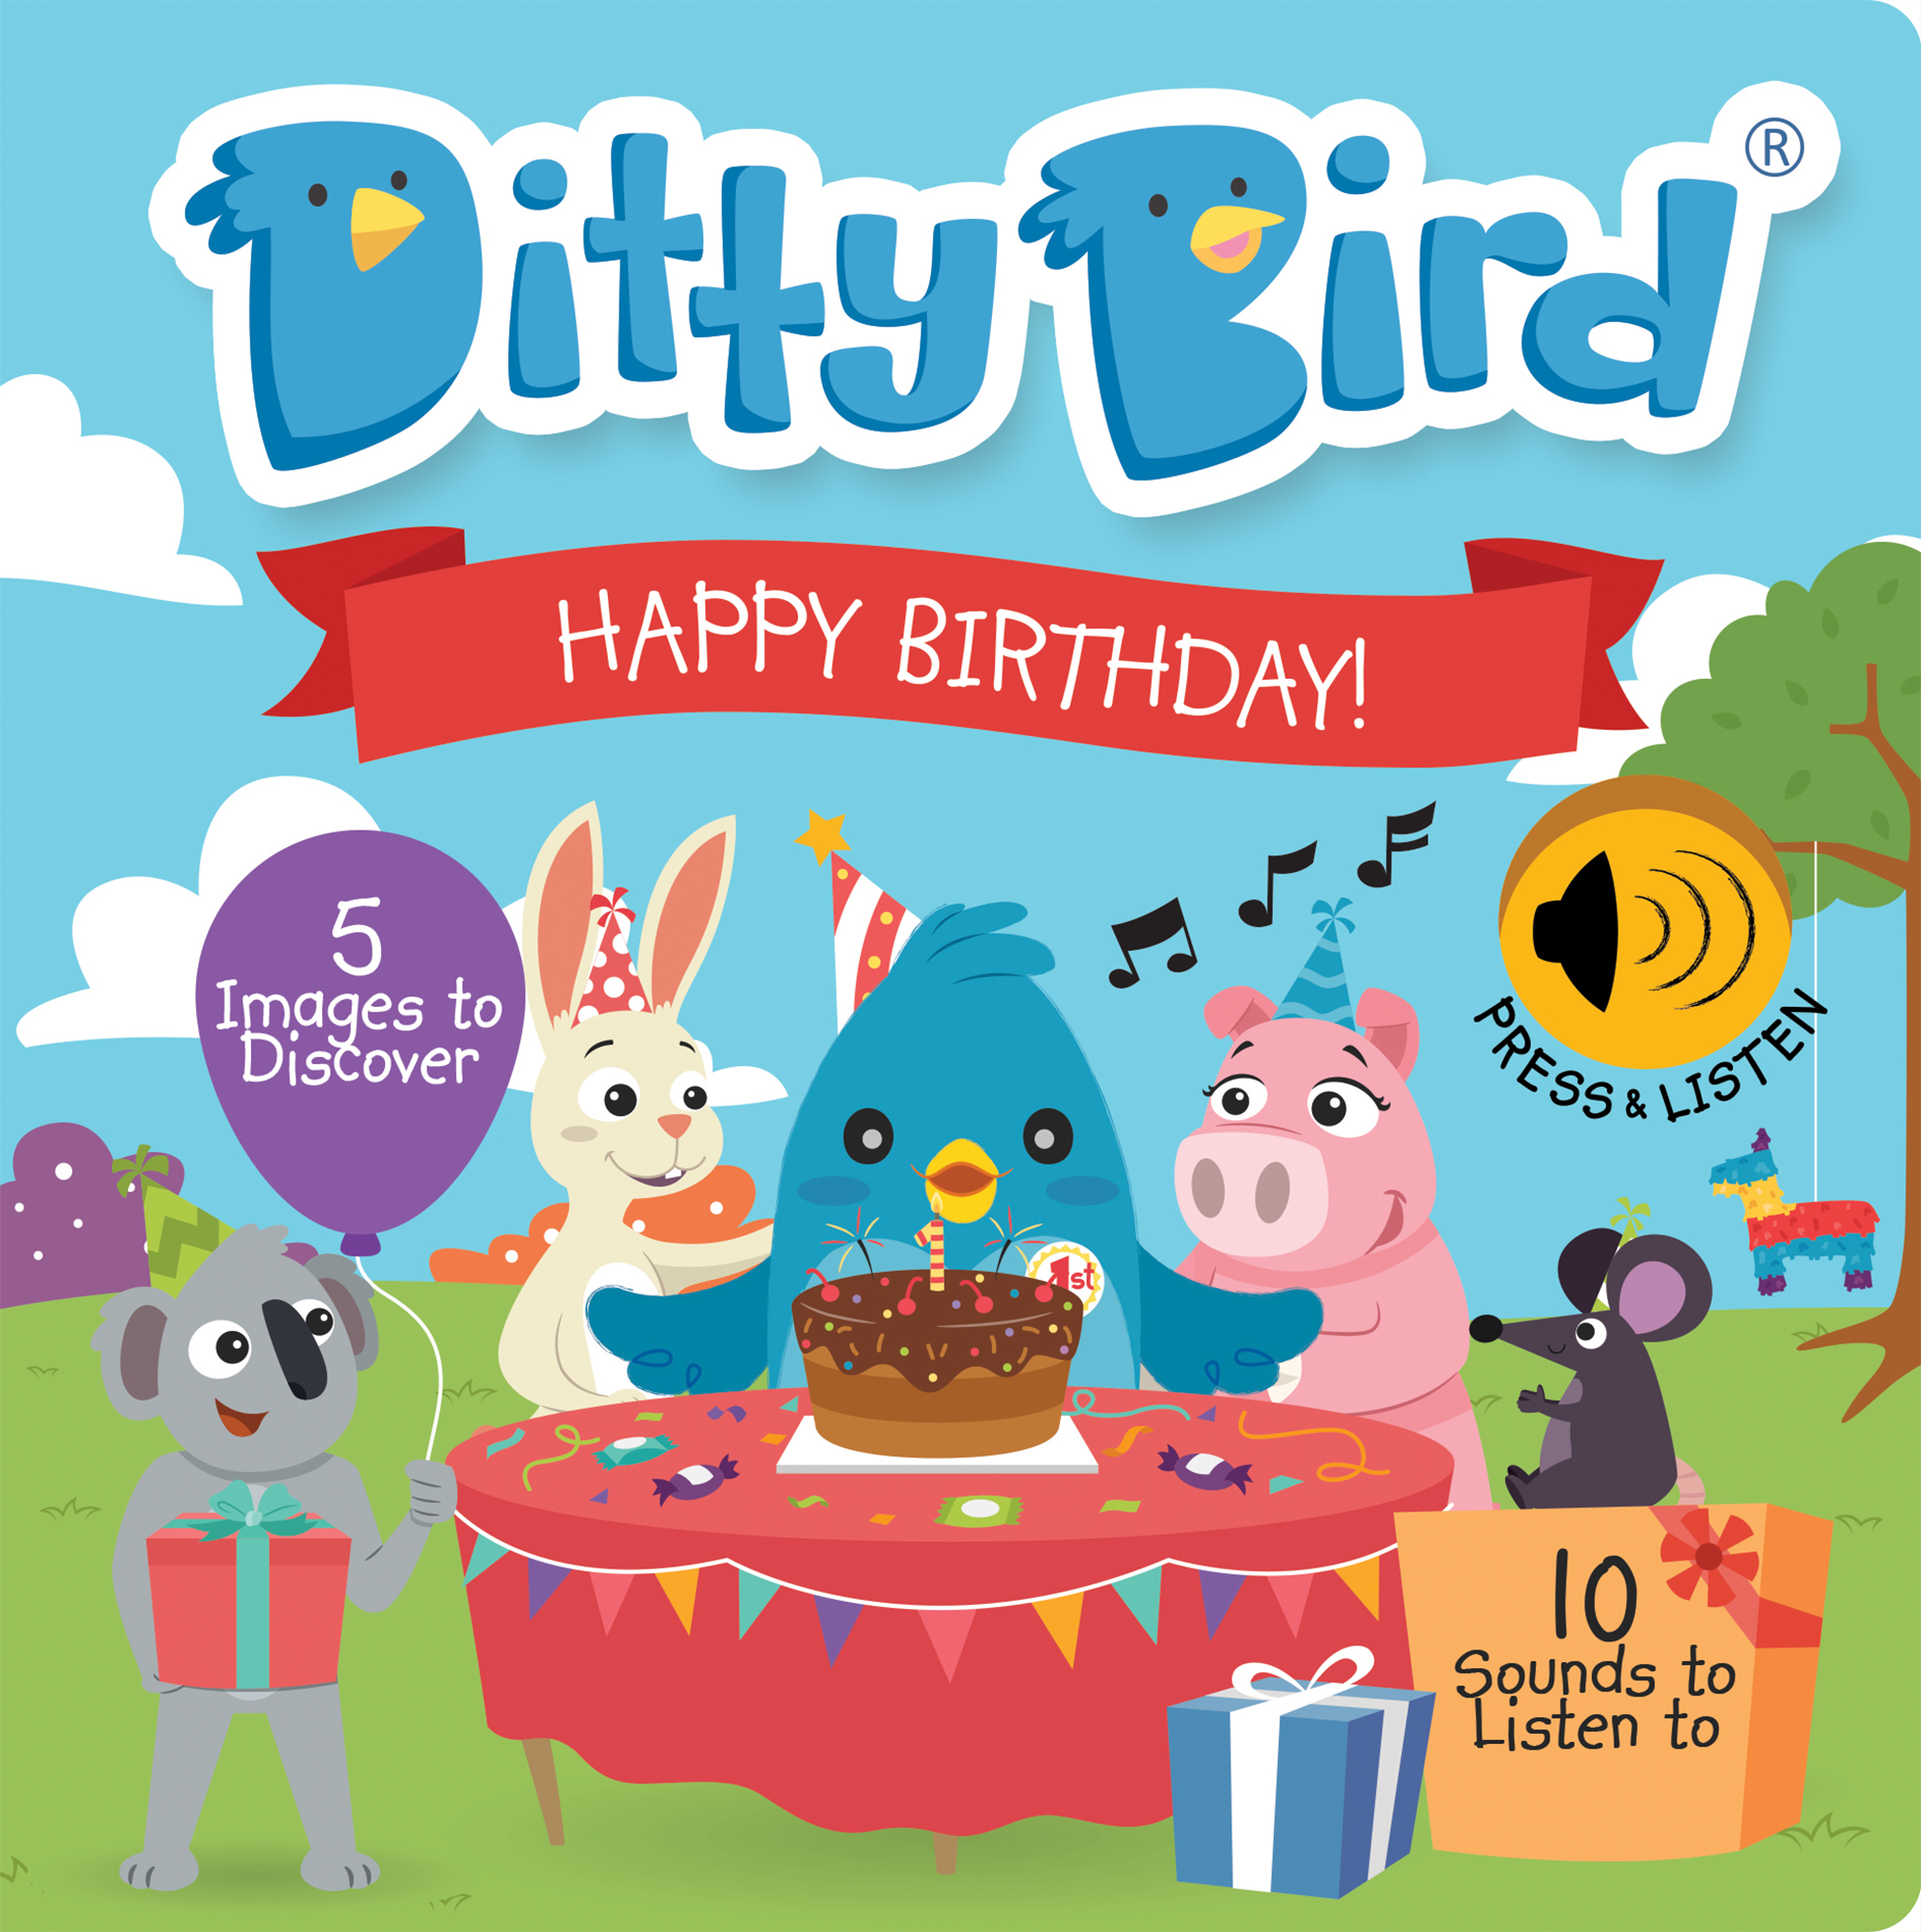 Happy Birthday by Ditty Bird